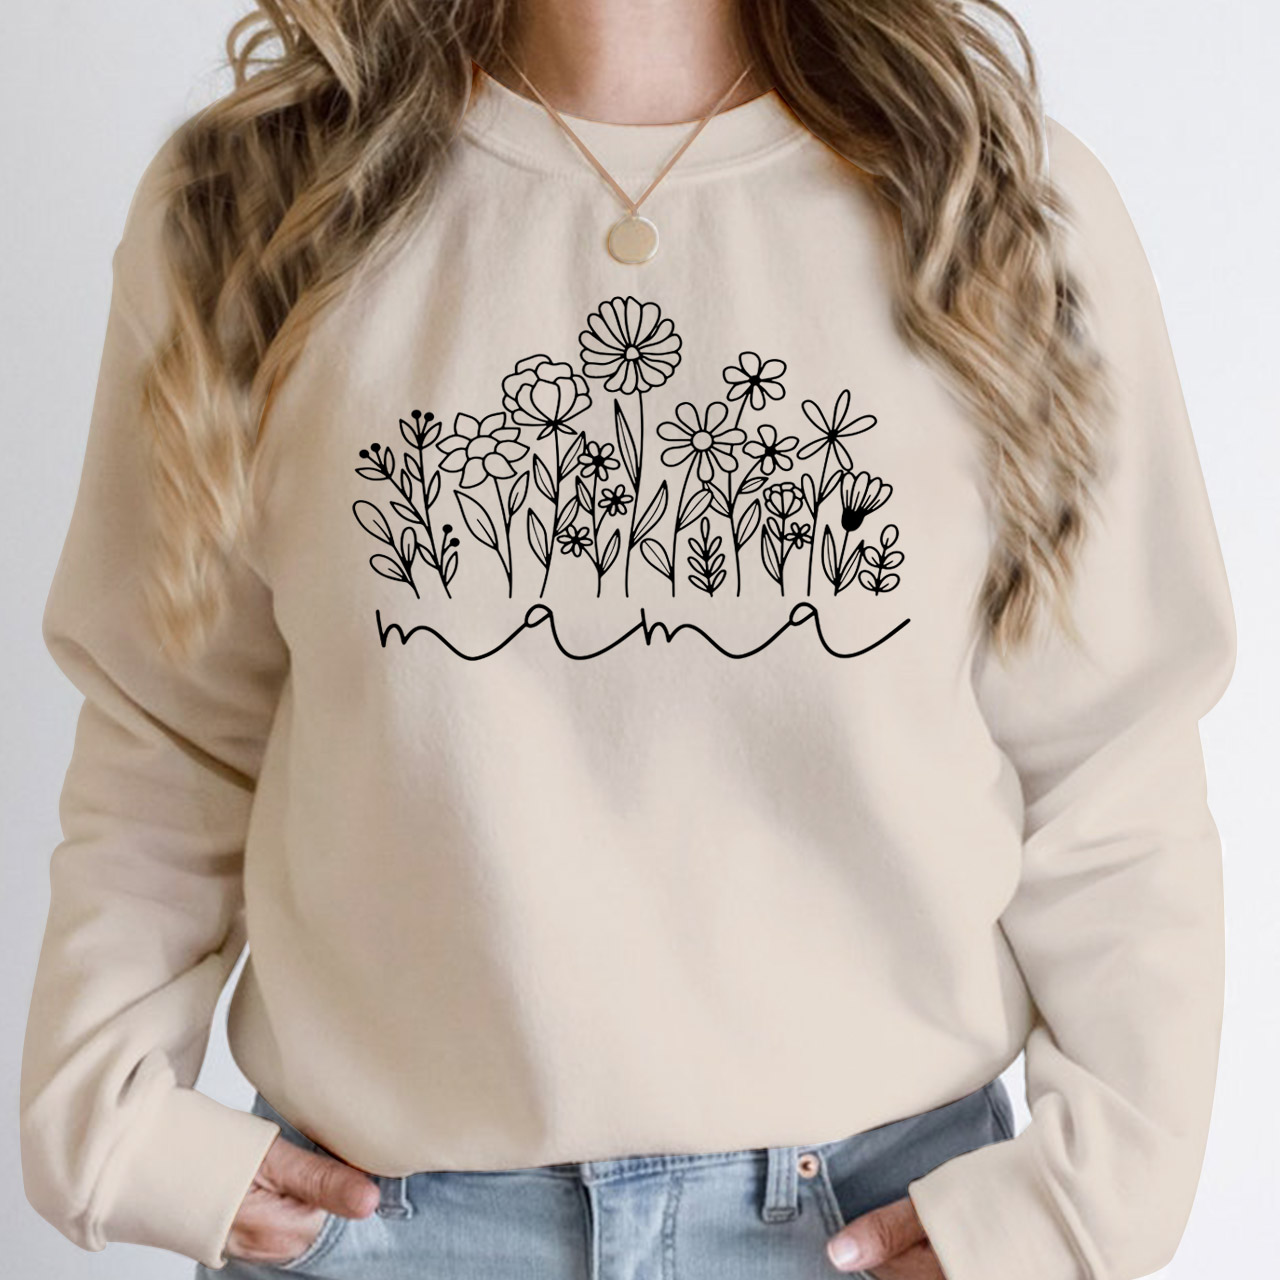 Mama Sweatshirt With Cute Wildflowers